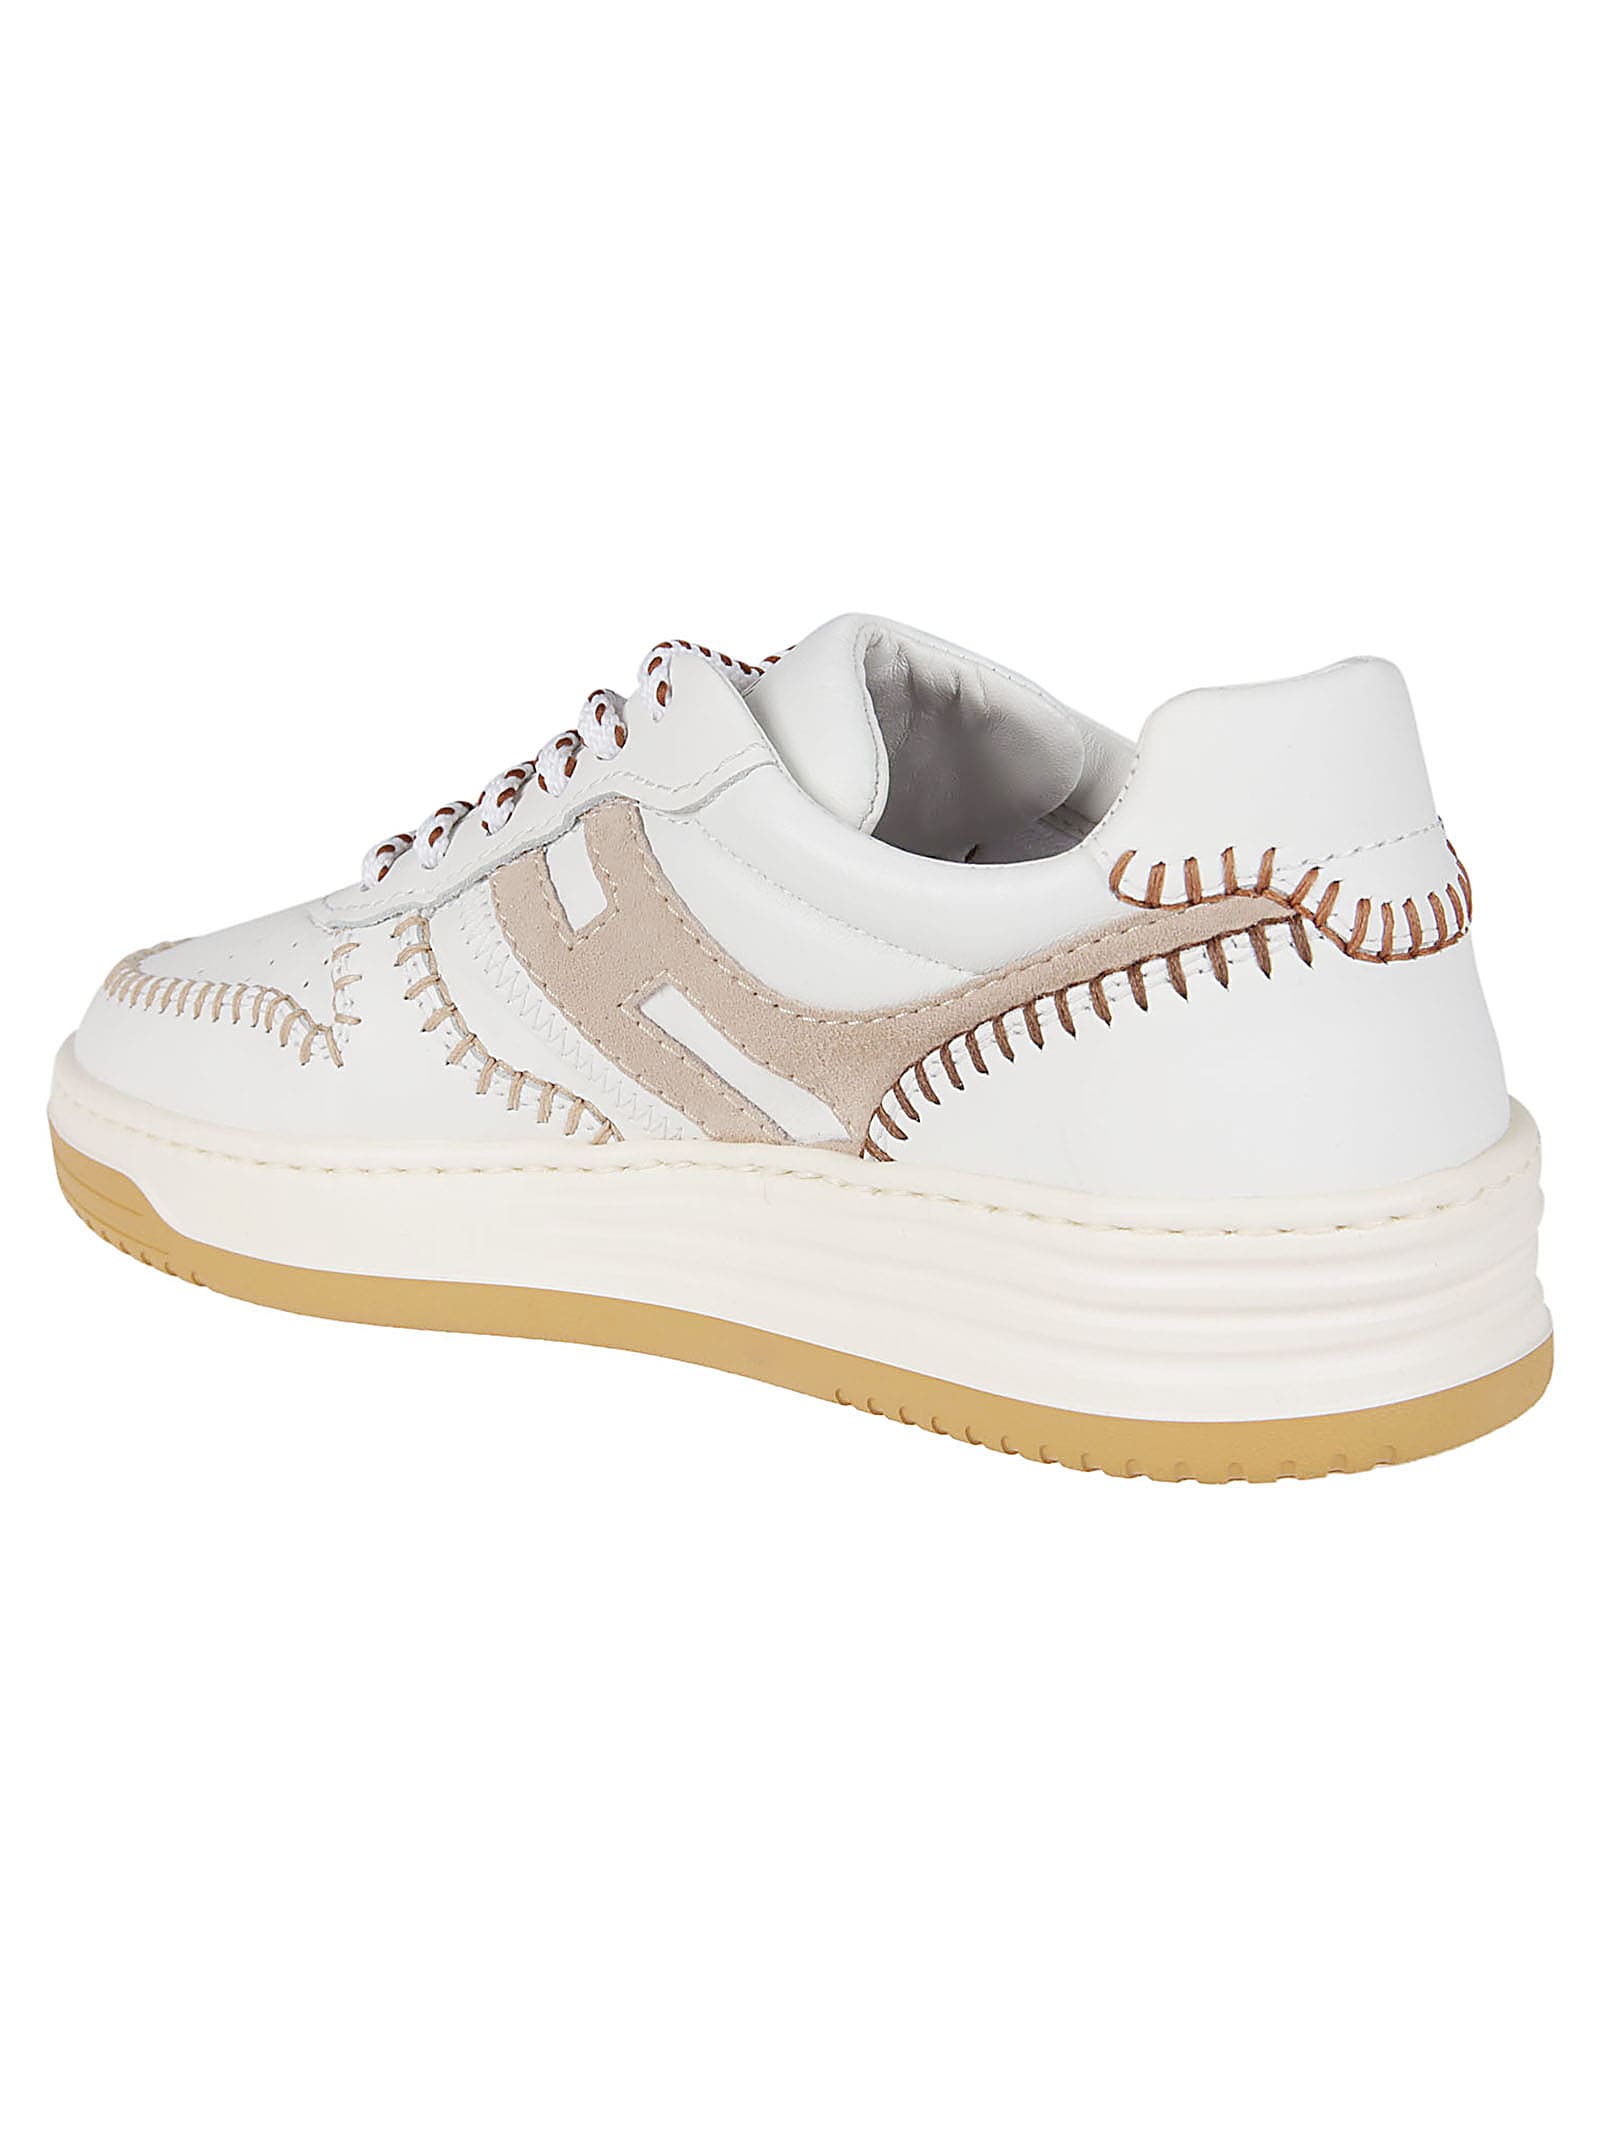 Shop Hogan H630 Sneakers In Xtd Bianco/zenzero